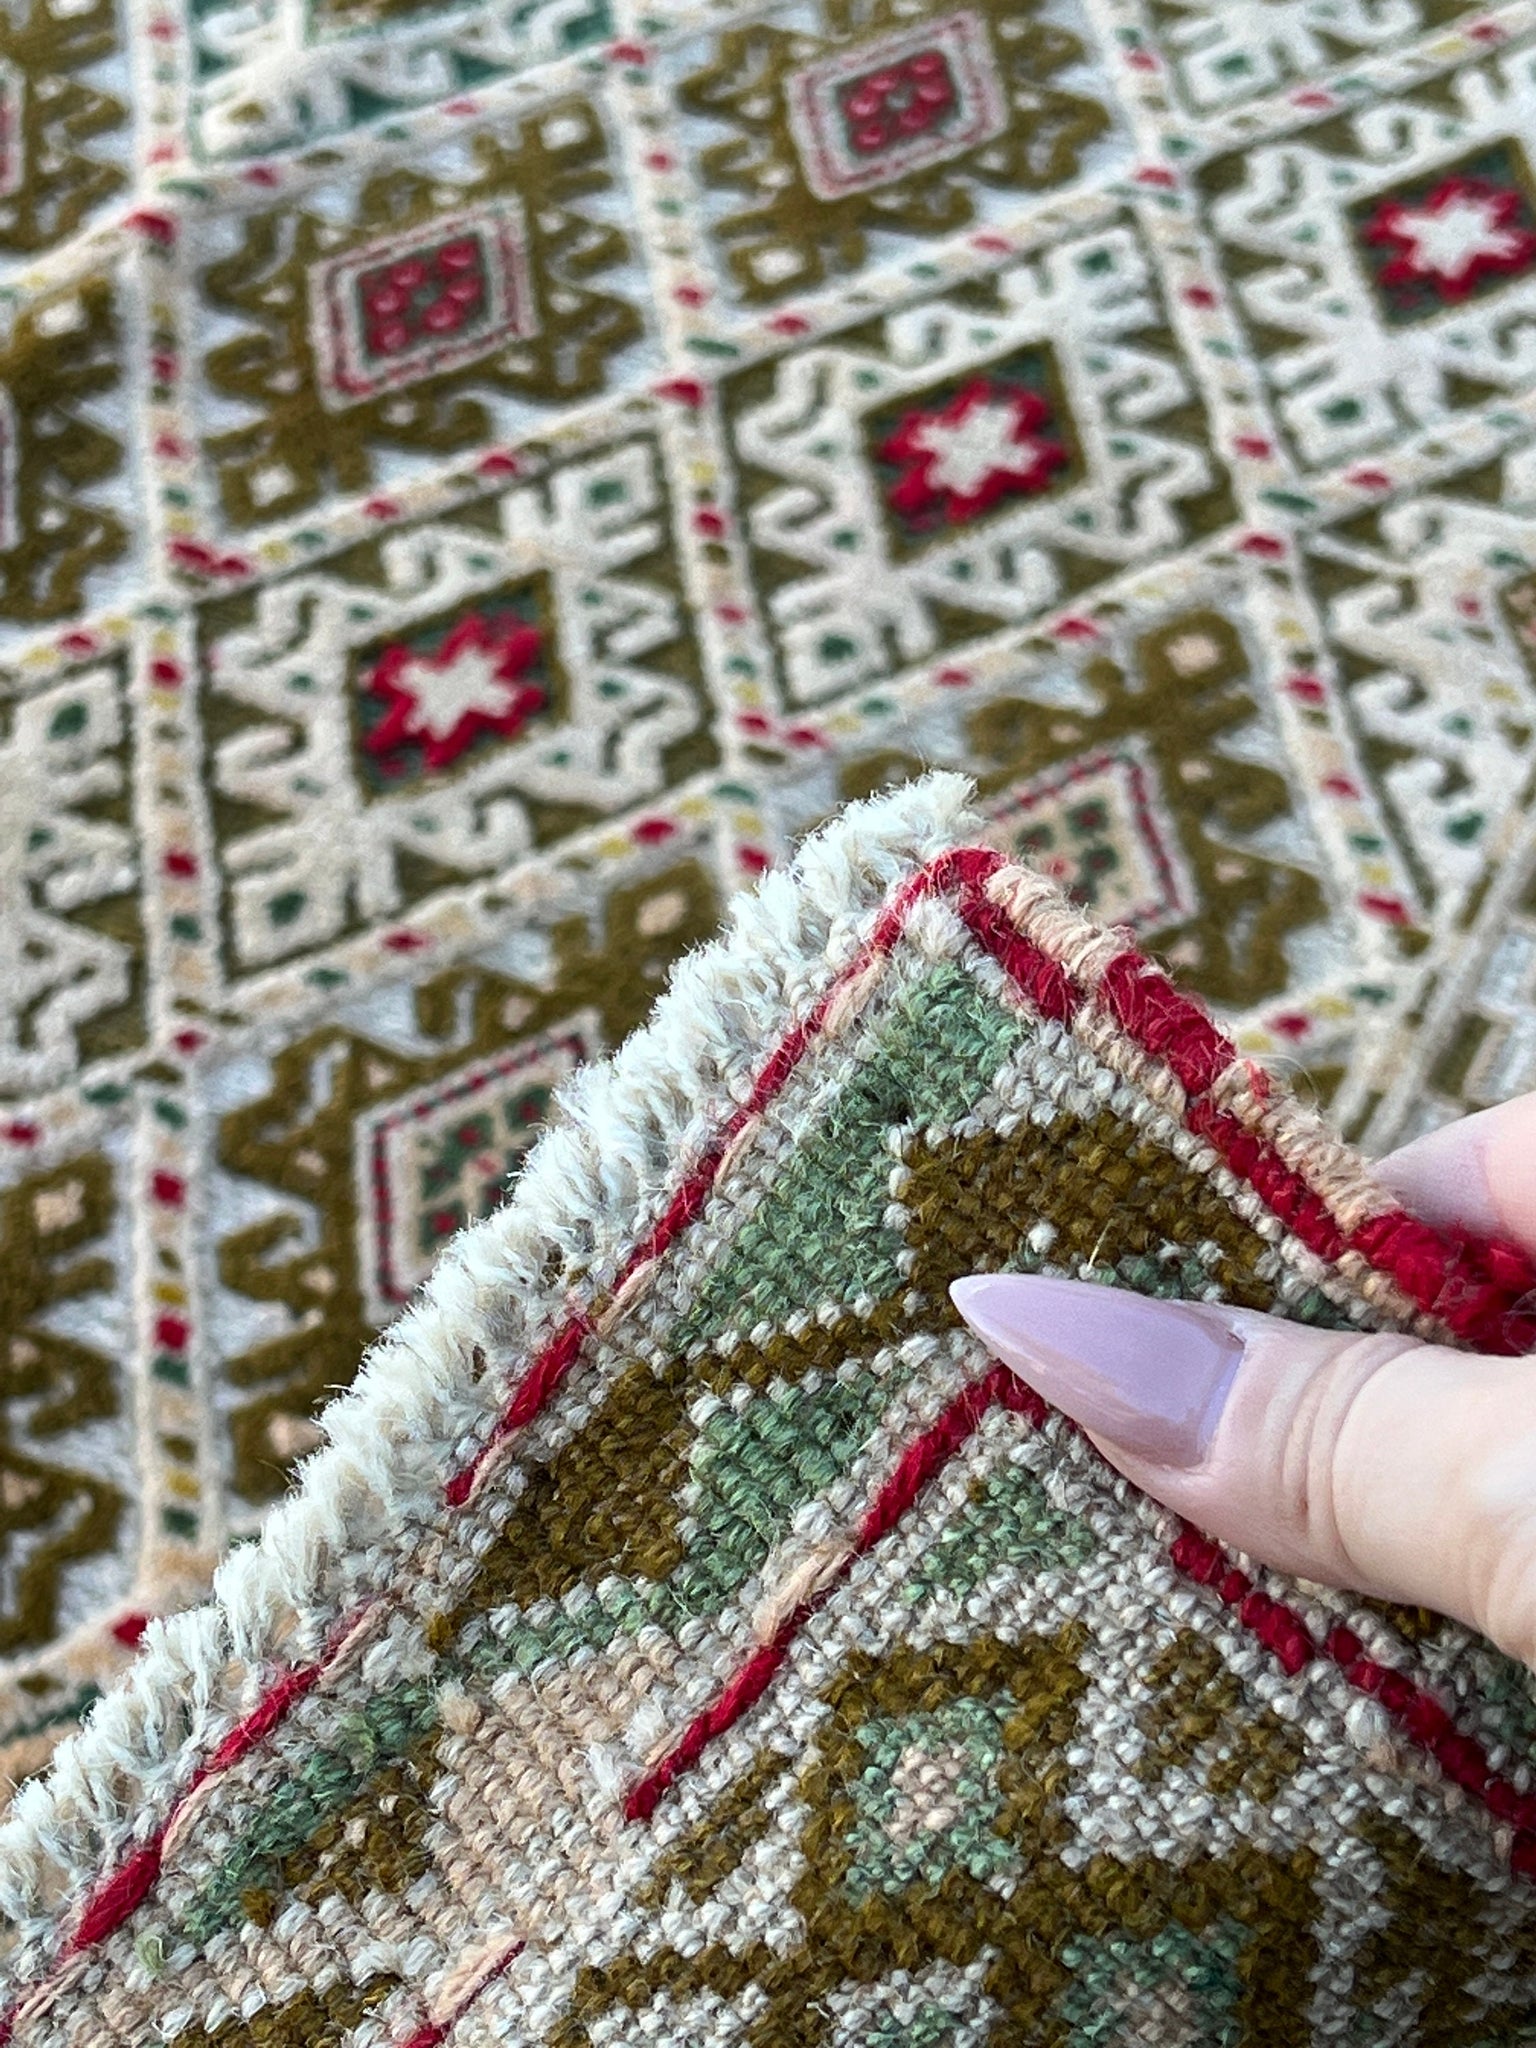 5x6 (150x180) Handmade Afghan Rug | Moss Green Ivory Pine Green Blood Red Cornsilk Yellow Teal Tan | Hand Knotted Geometric Wool Boho